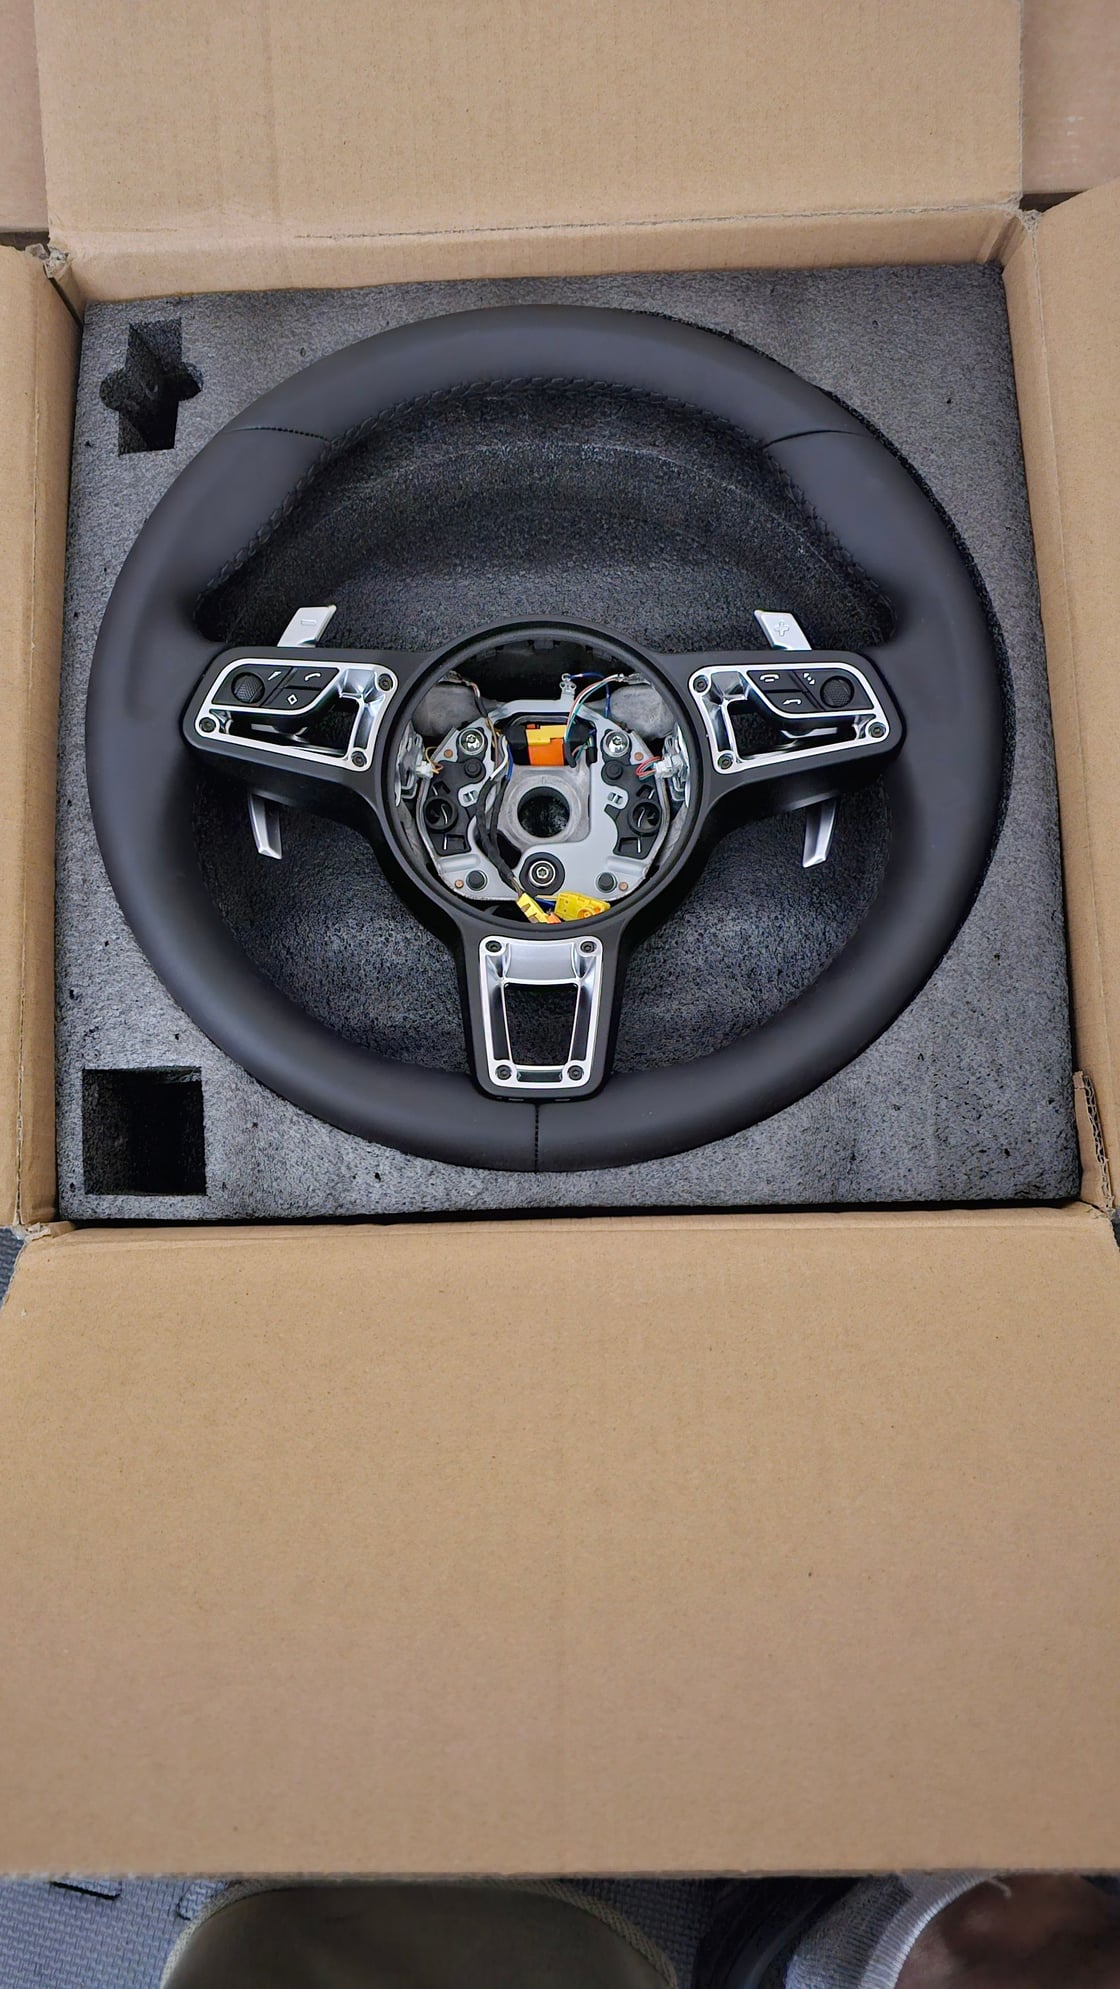 Steering/Suspension - NIB 991 multifunction steering wheel - New - 2013 to 2016 Porsche 911 - South Orange, NJ 07079, United States